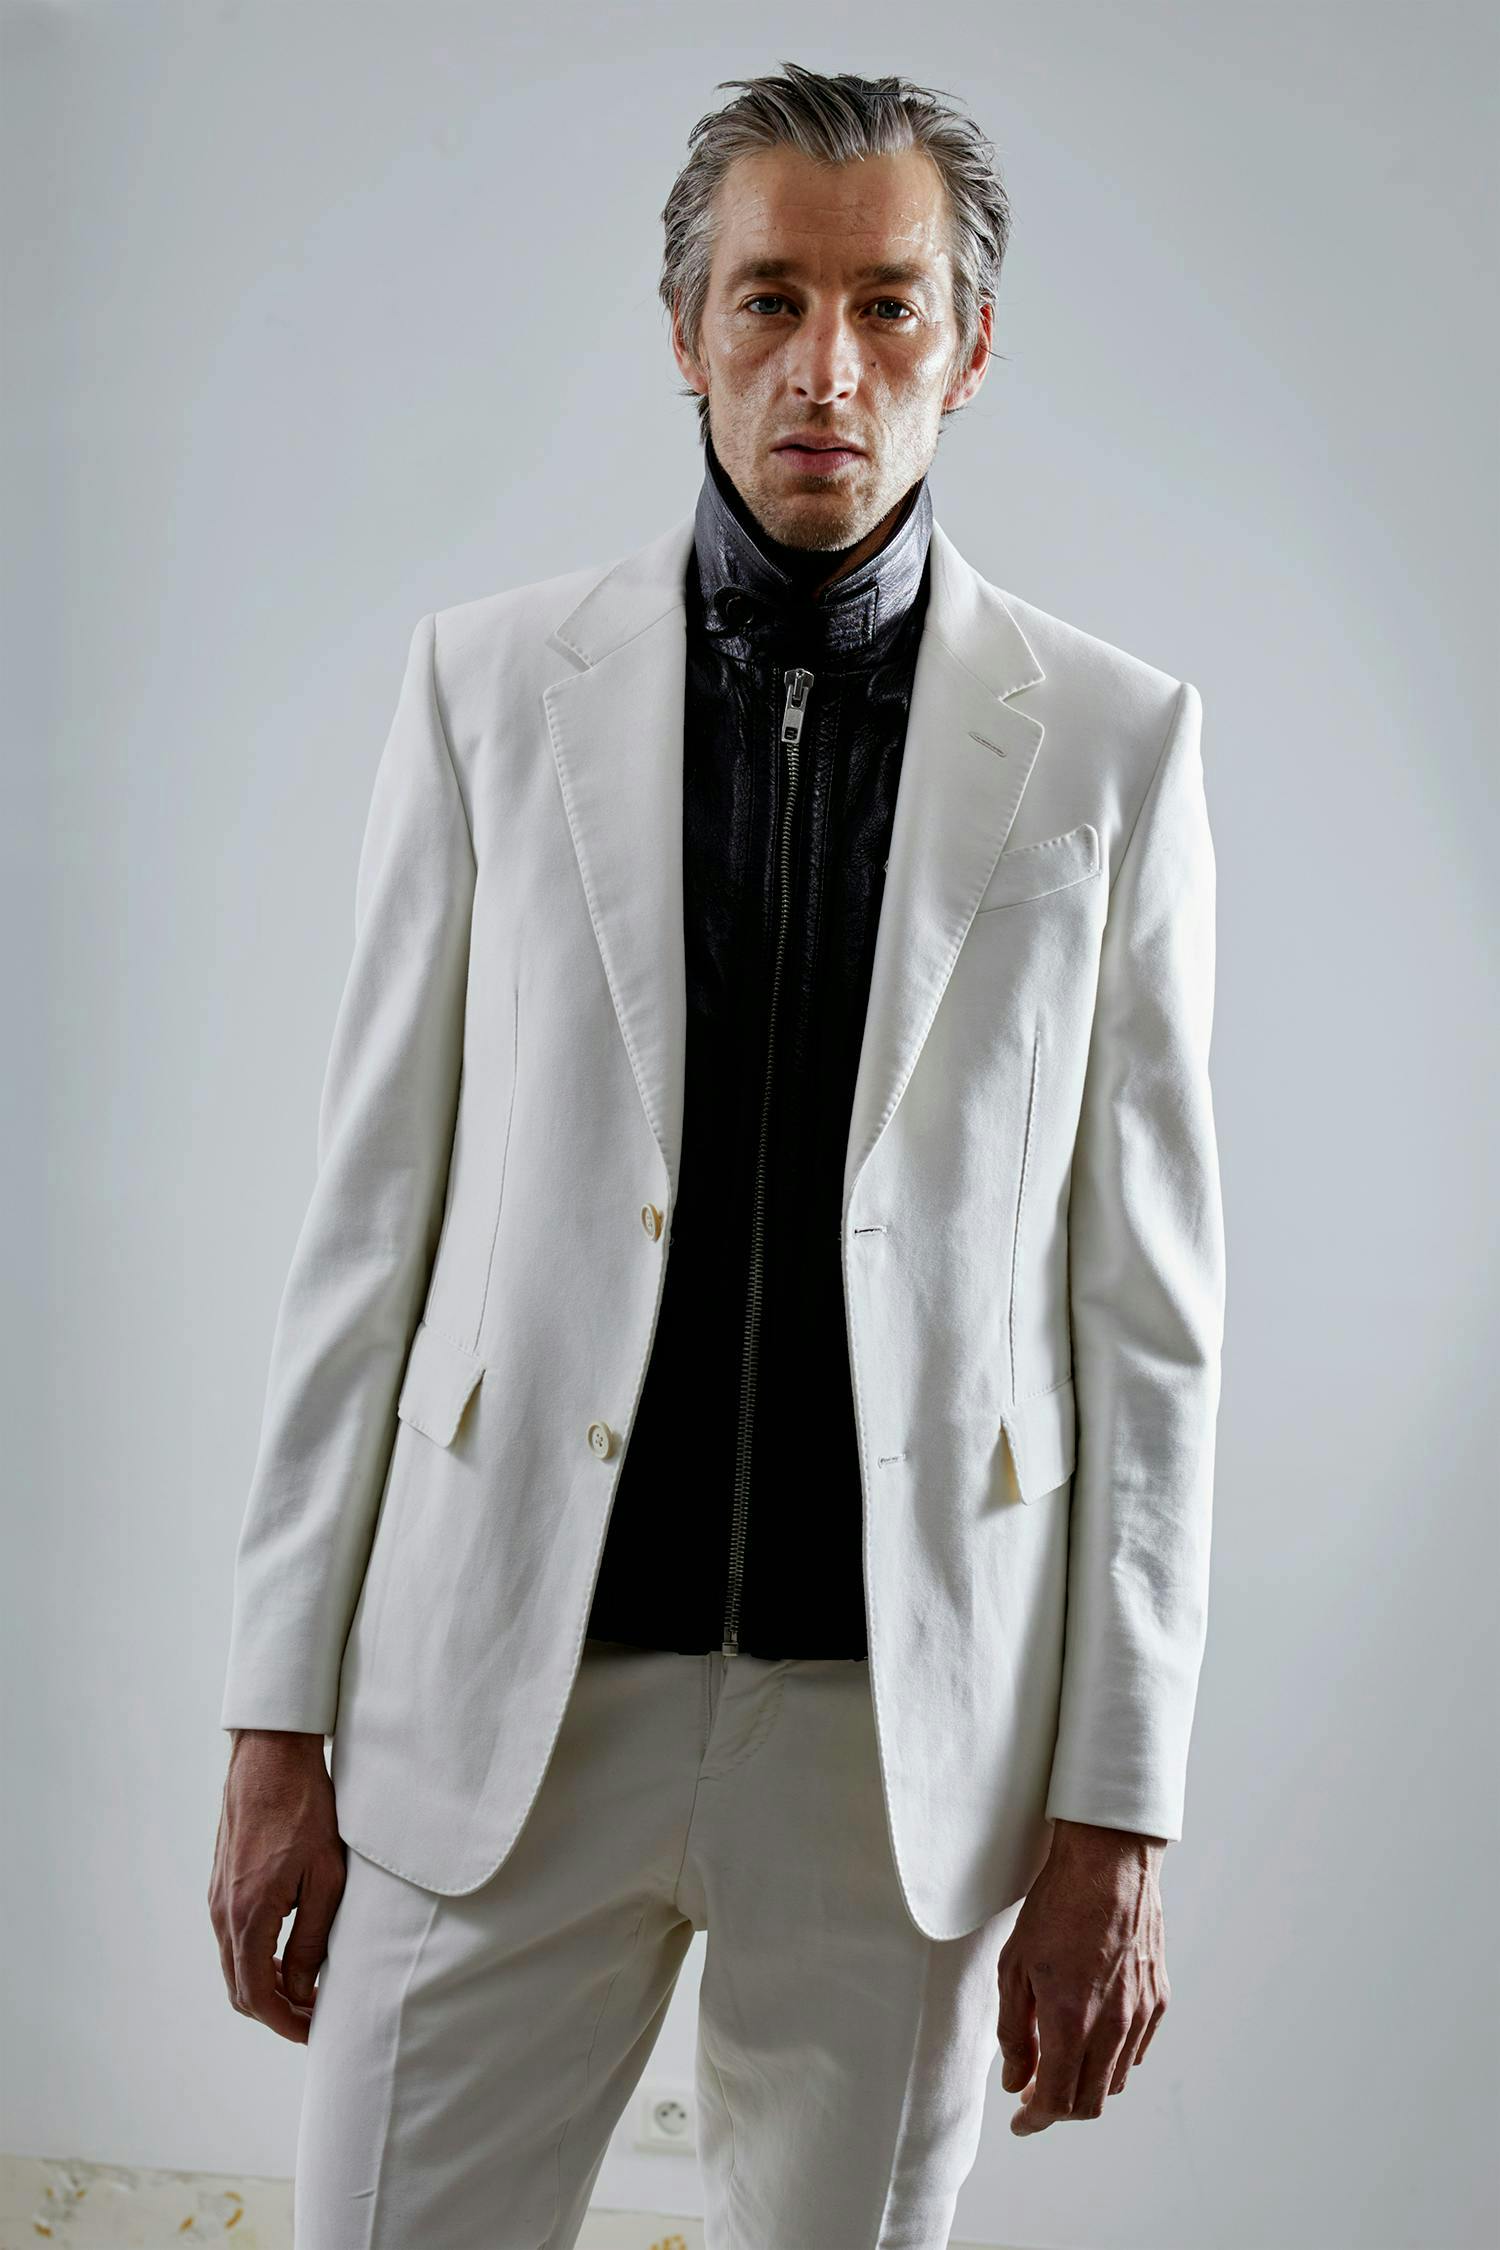 clothing apparel suit coat overcoat blazer jacket tuxedo person shirt